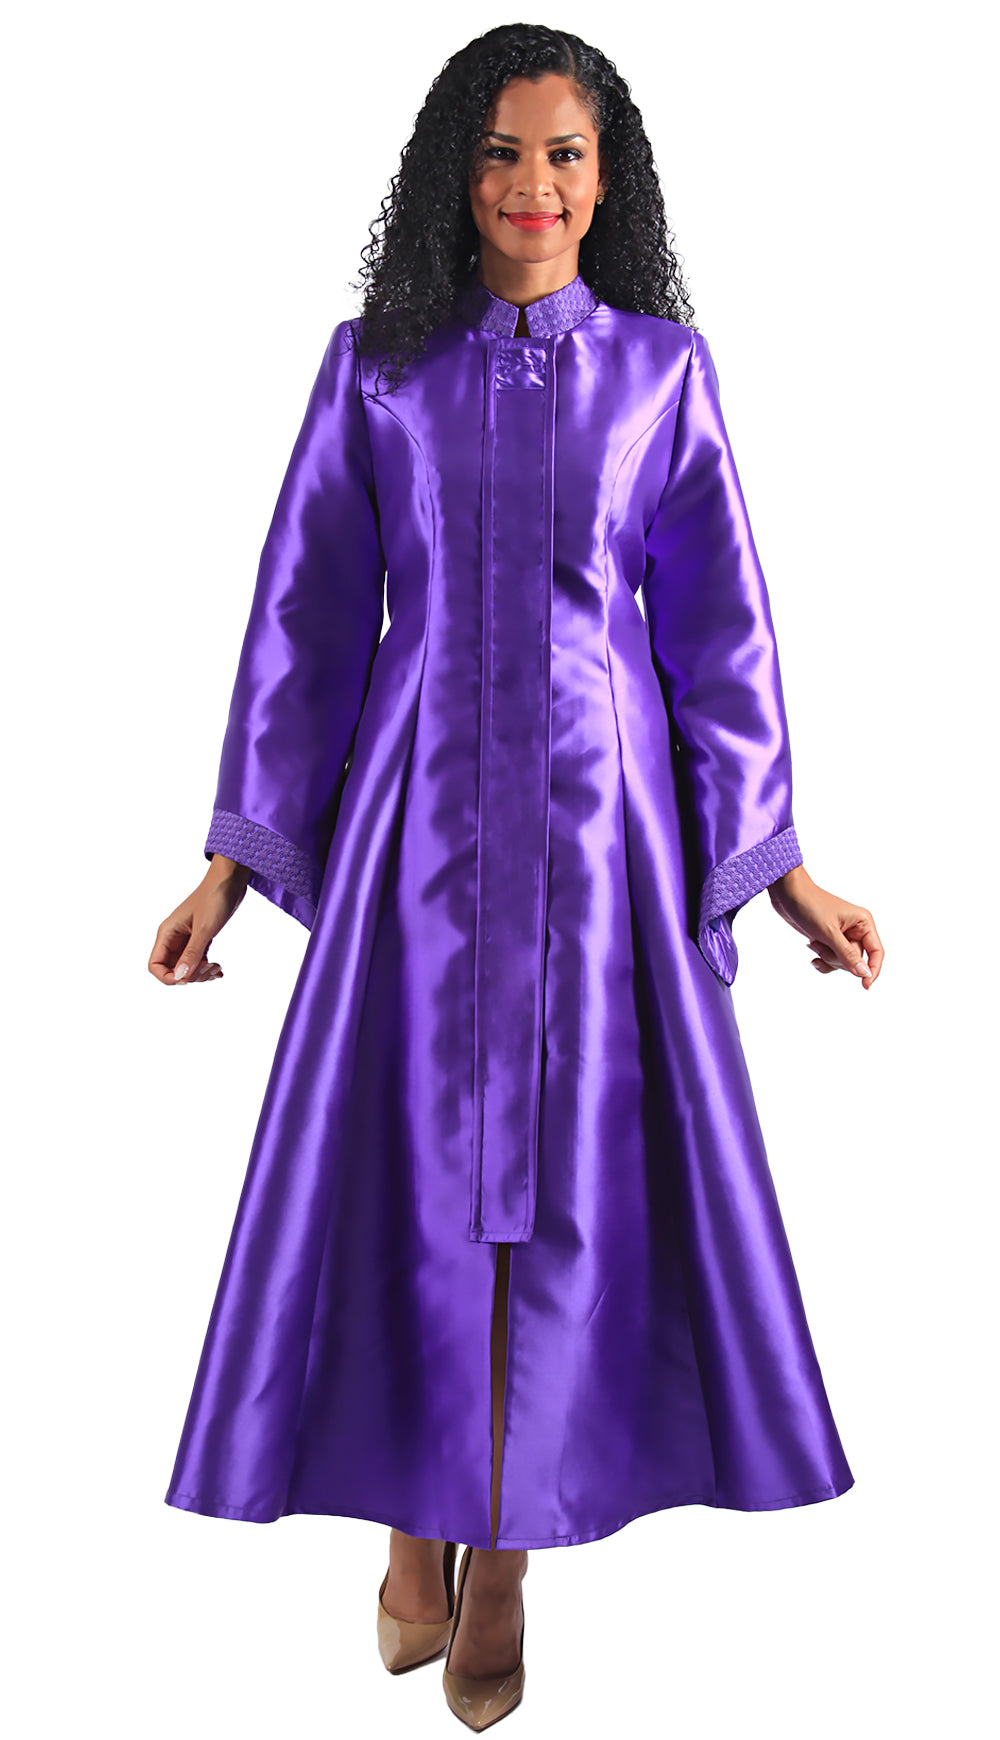 Diana Church Robe 8595-Purple - Church Suits For Less